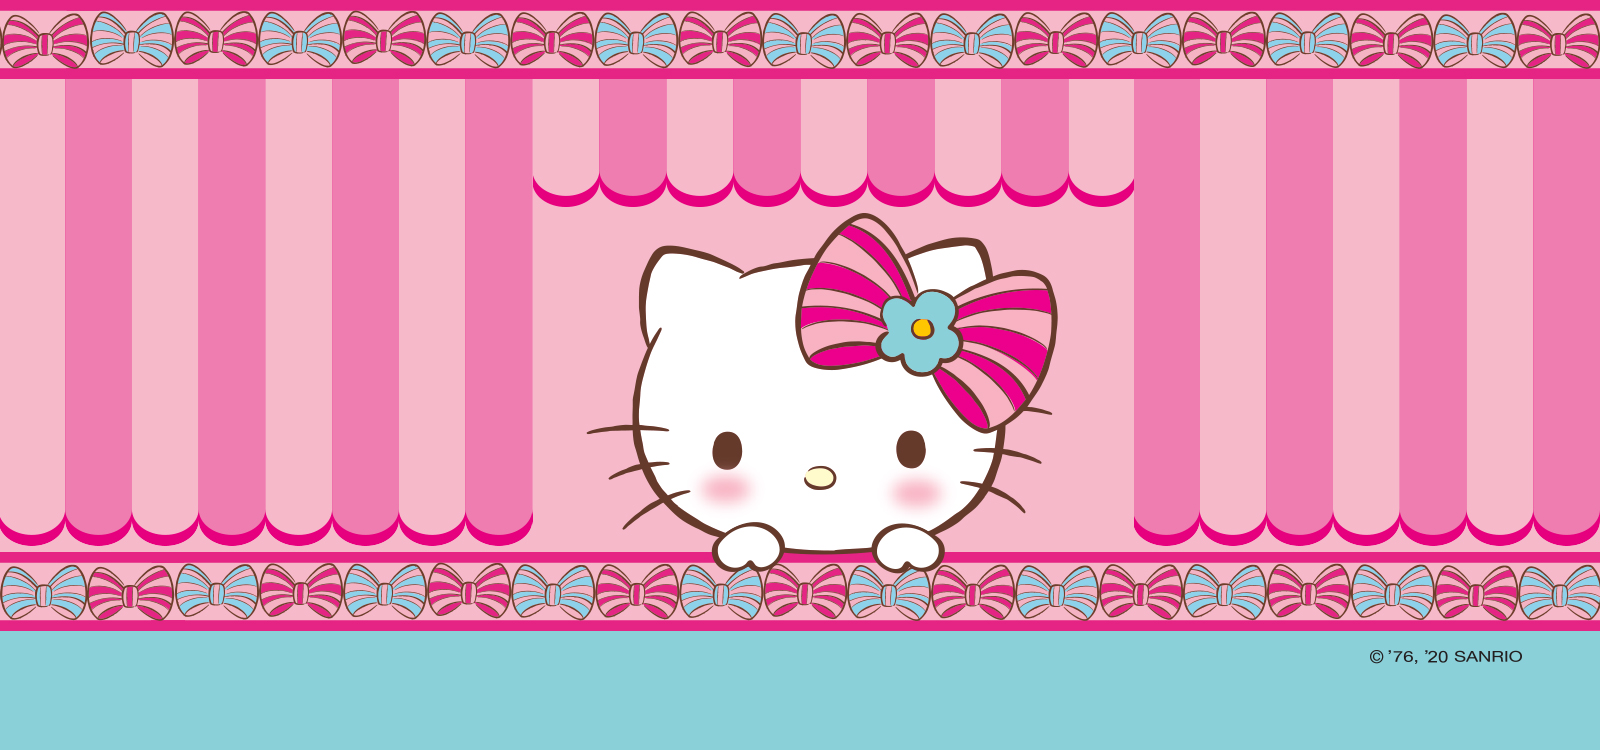 Шоу Hello Kitty "Праздник счастья"